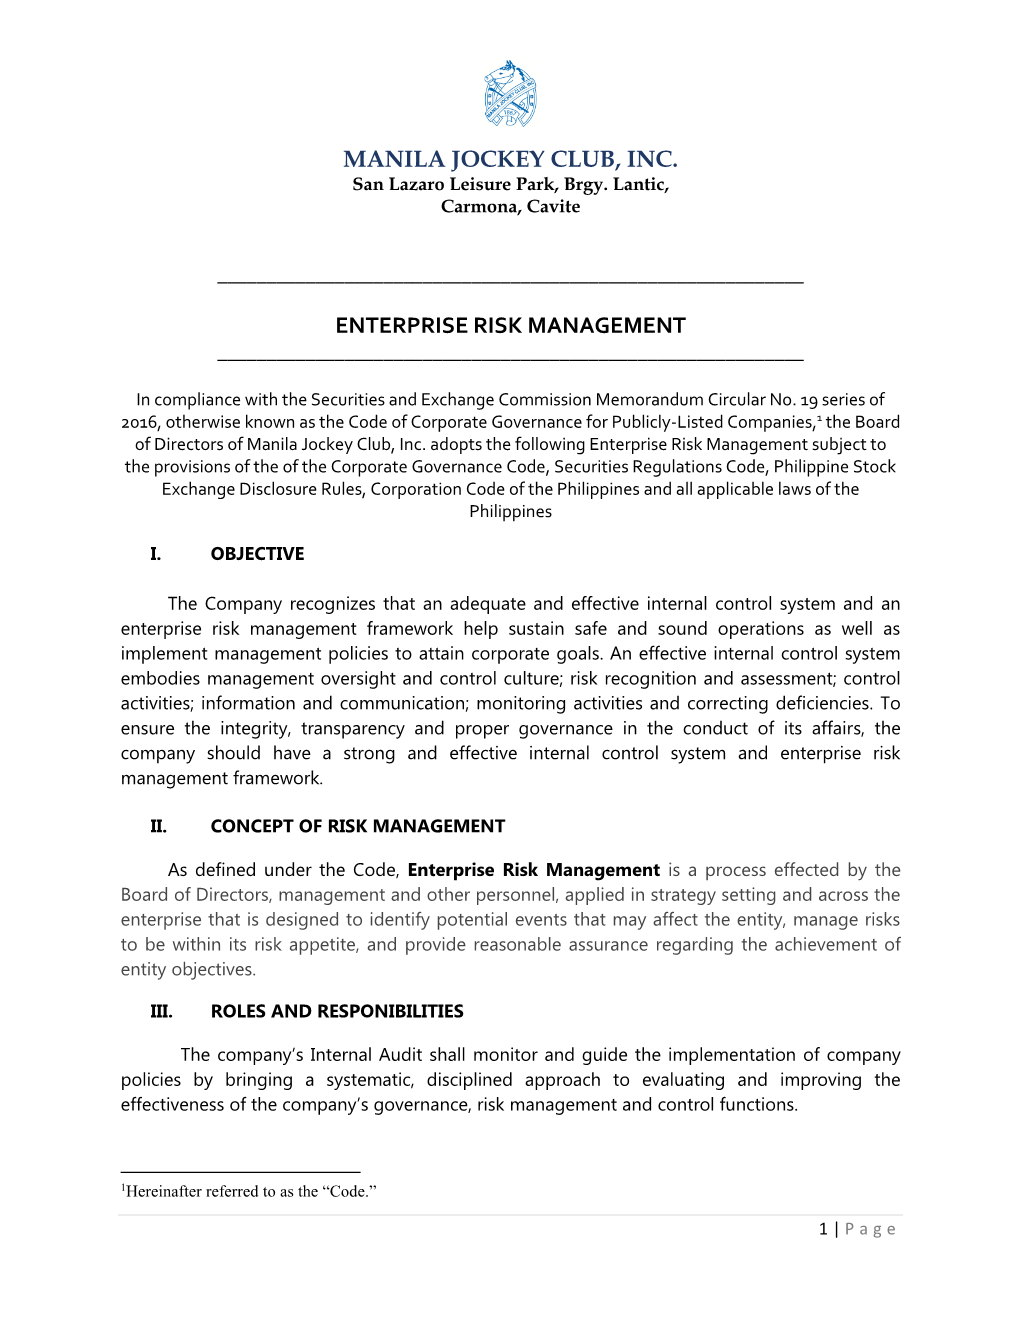 Manila Jockey Club, Inc. Enterprise Risk Management